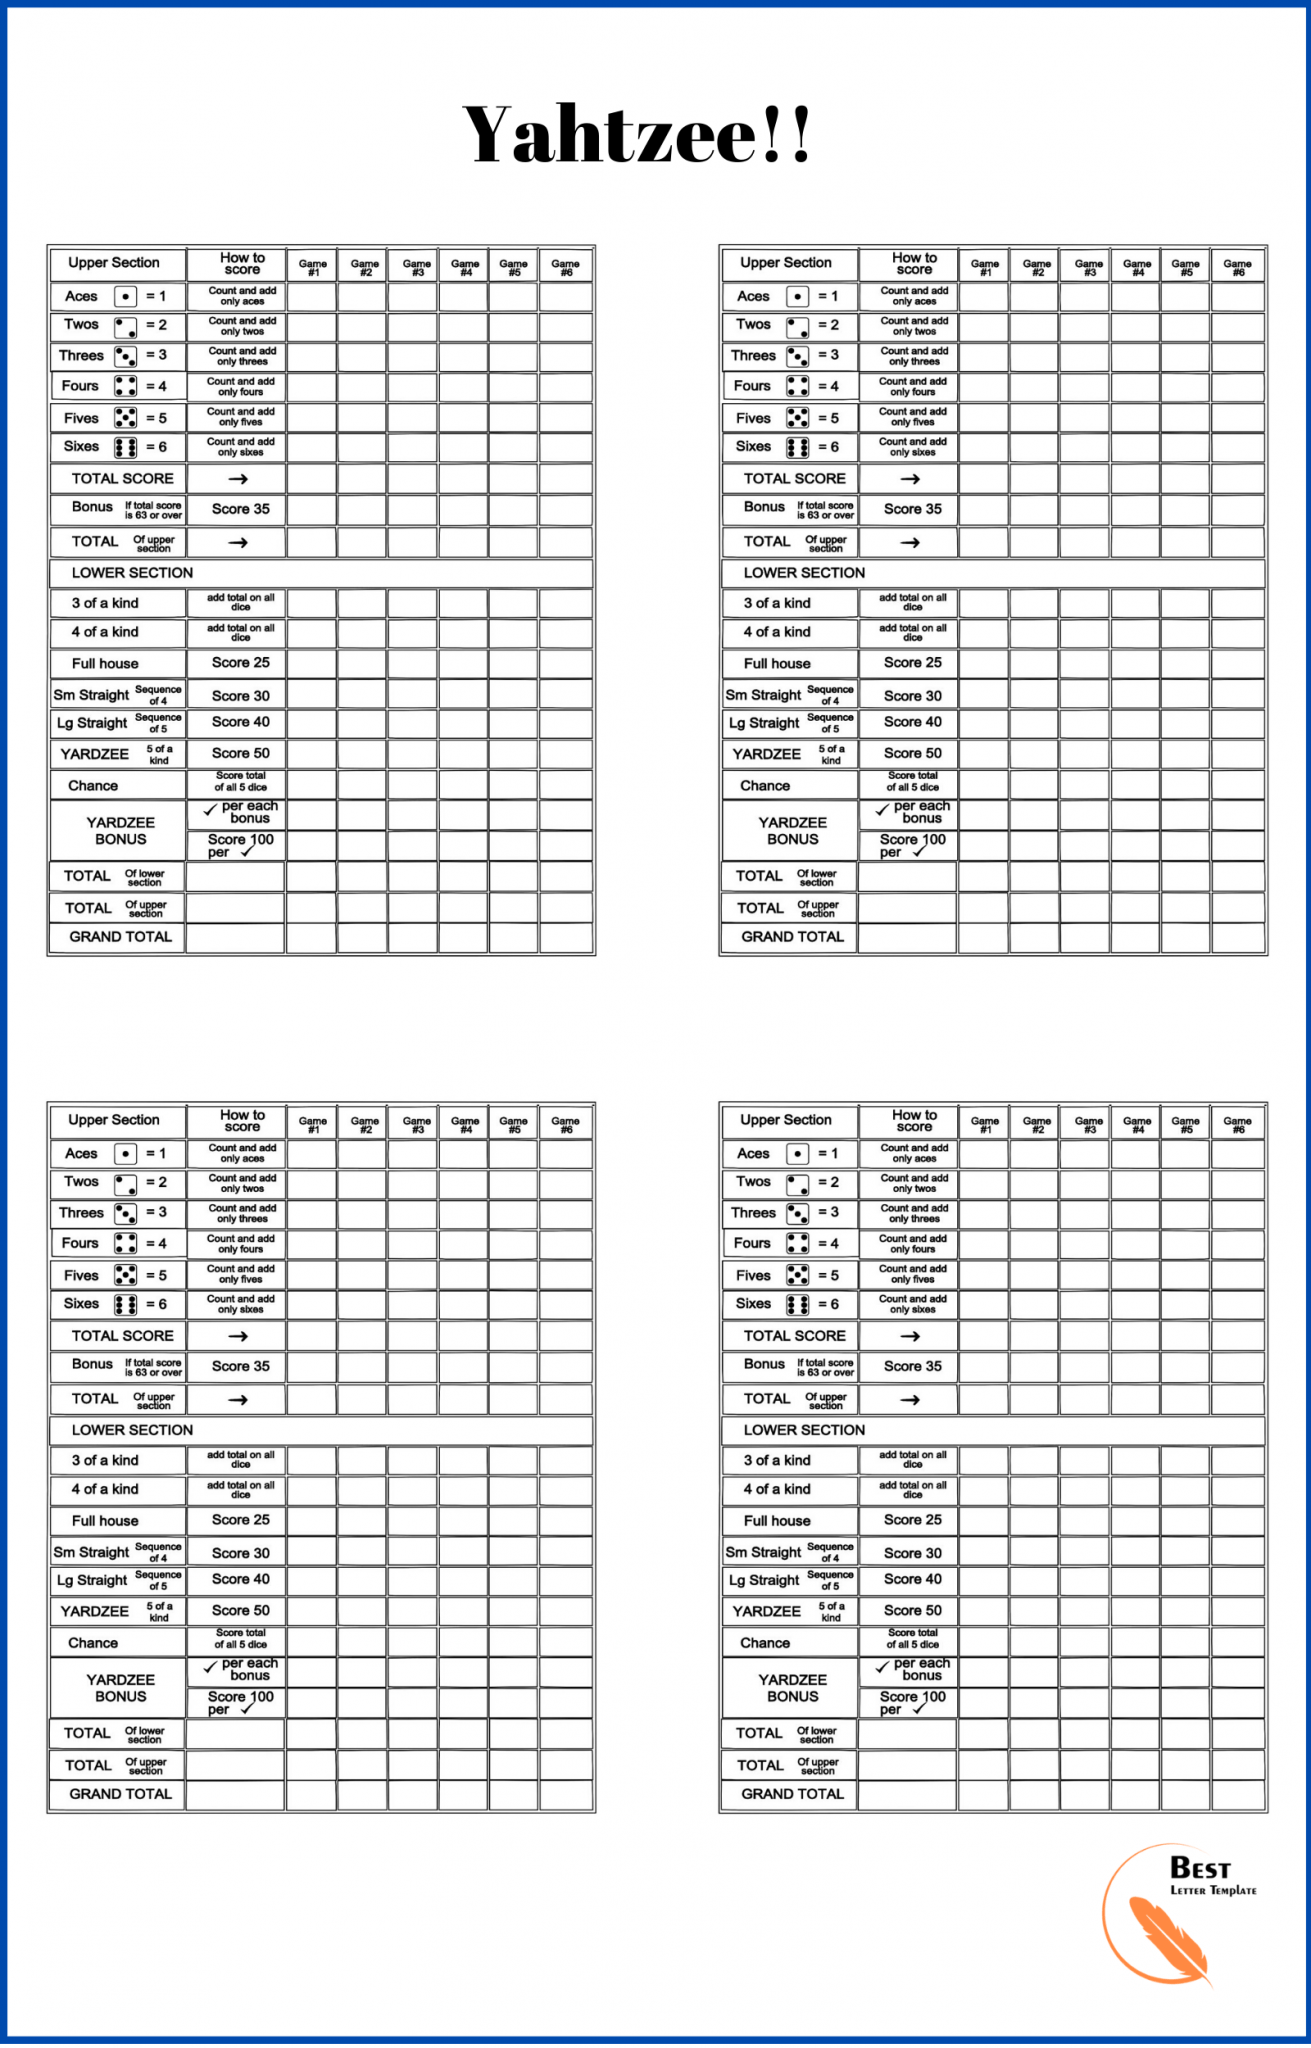 printable-yahtzee-score-cardssheet-pdf-online-40-free-printable